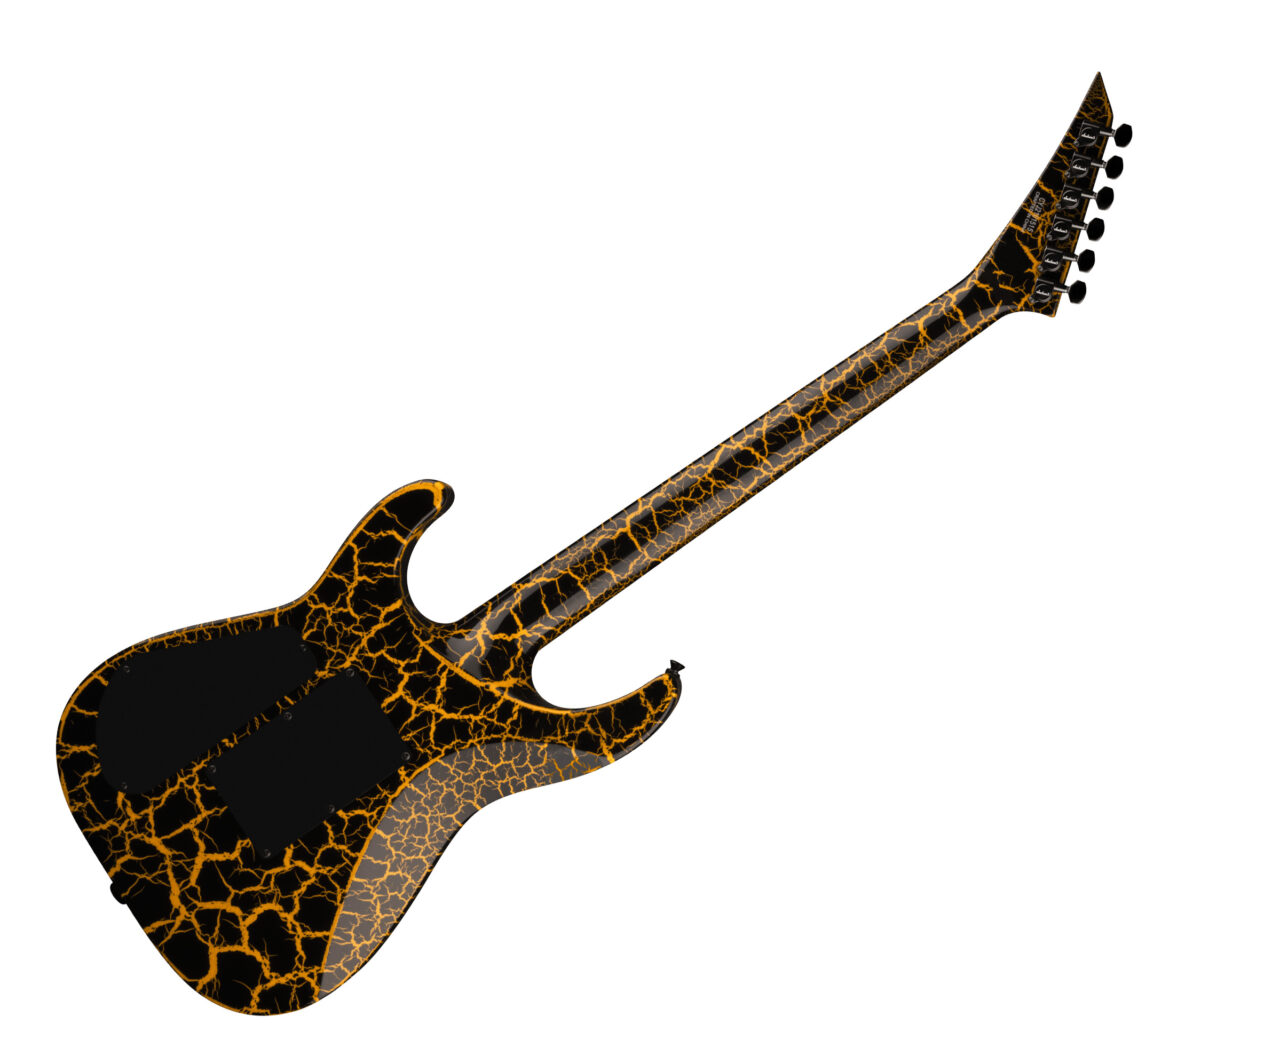 Jackson X Series Soloist SL3X DX Yellow Crackle エレキギター